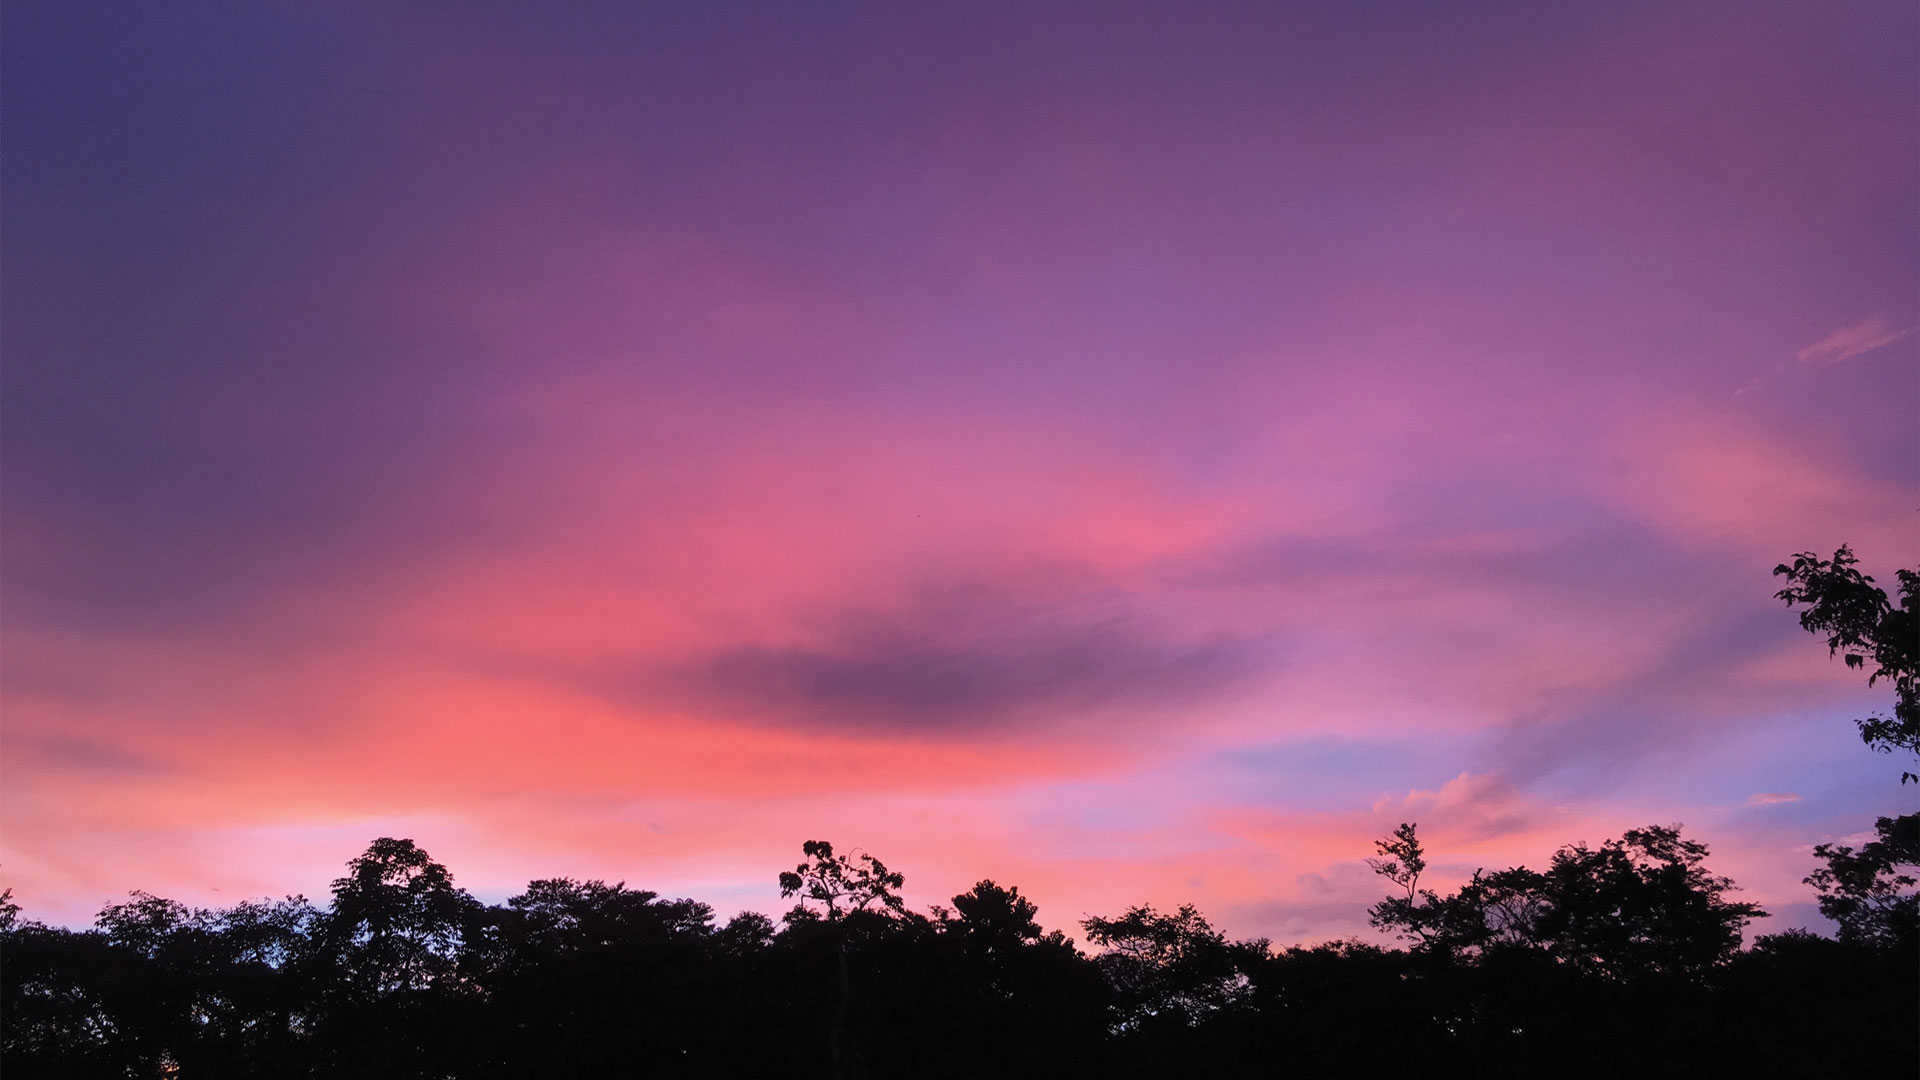 Pink and purple sunset jungle silhouette in Playa Grande, Costa Rica